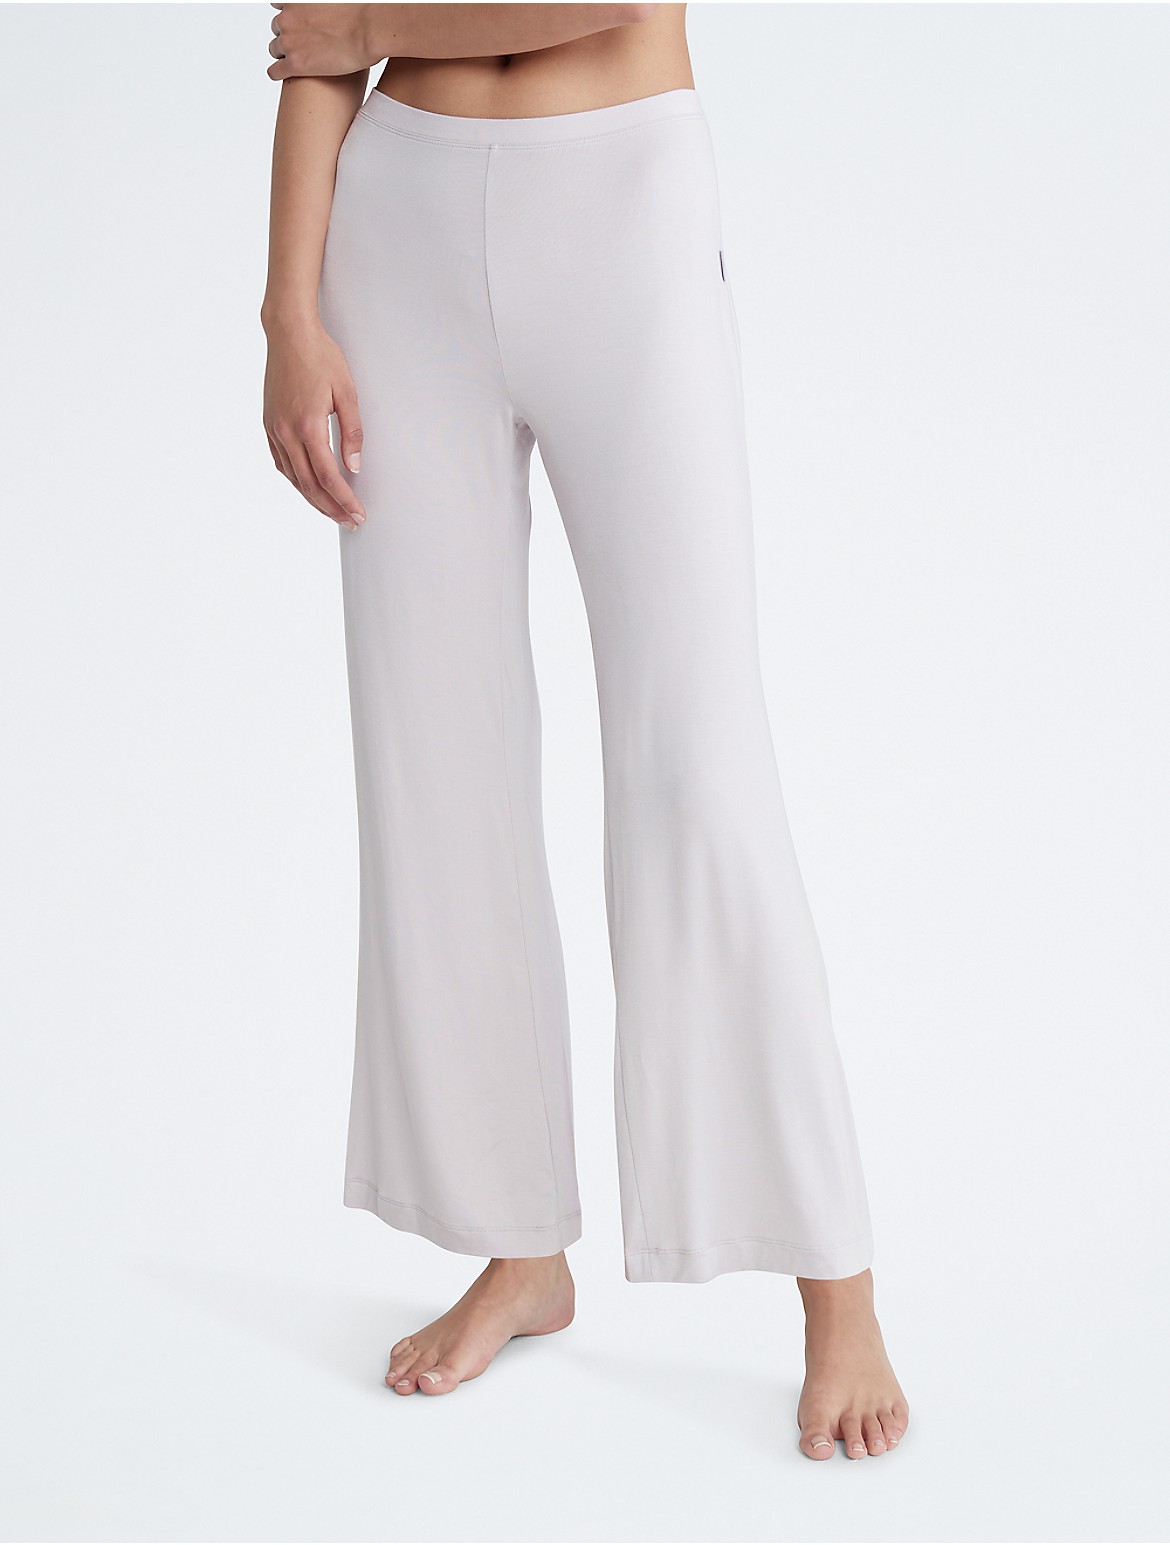 Calvin Klein Women's Ultra-Light Lounge Sleep Pants - Grey - XS